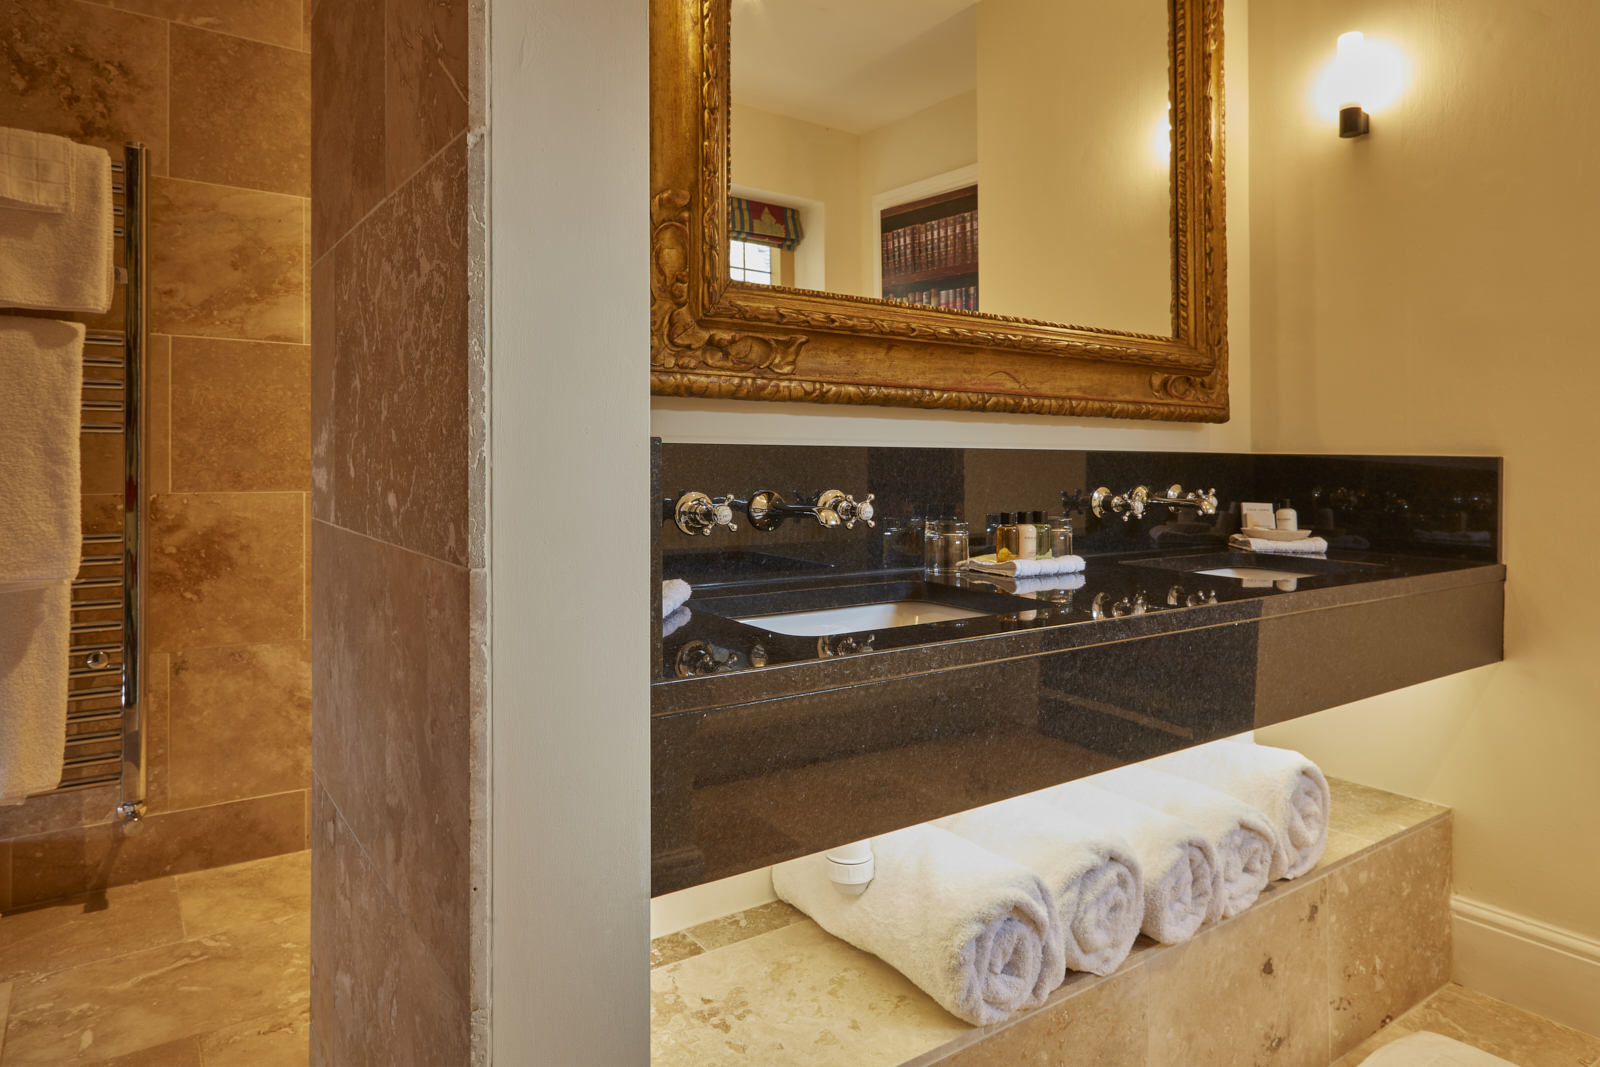 Elegant bathroom with towel set and beautiful mirror.